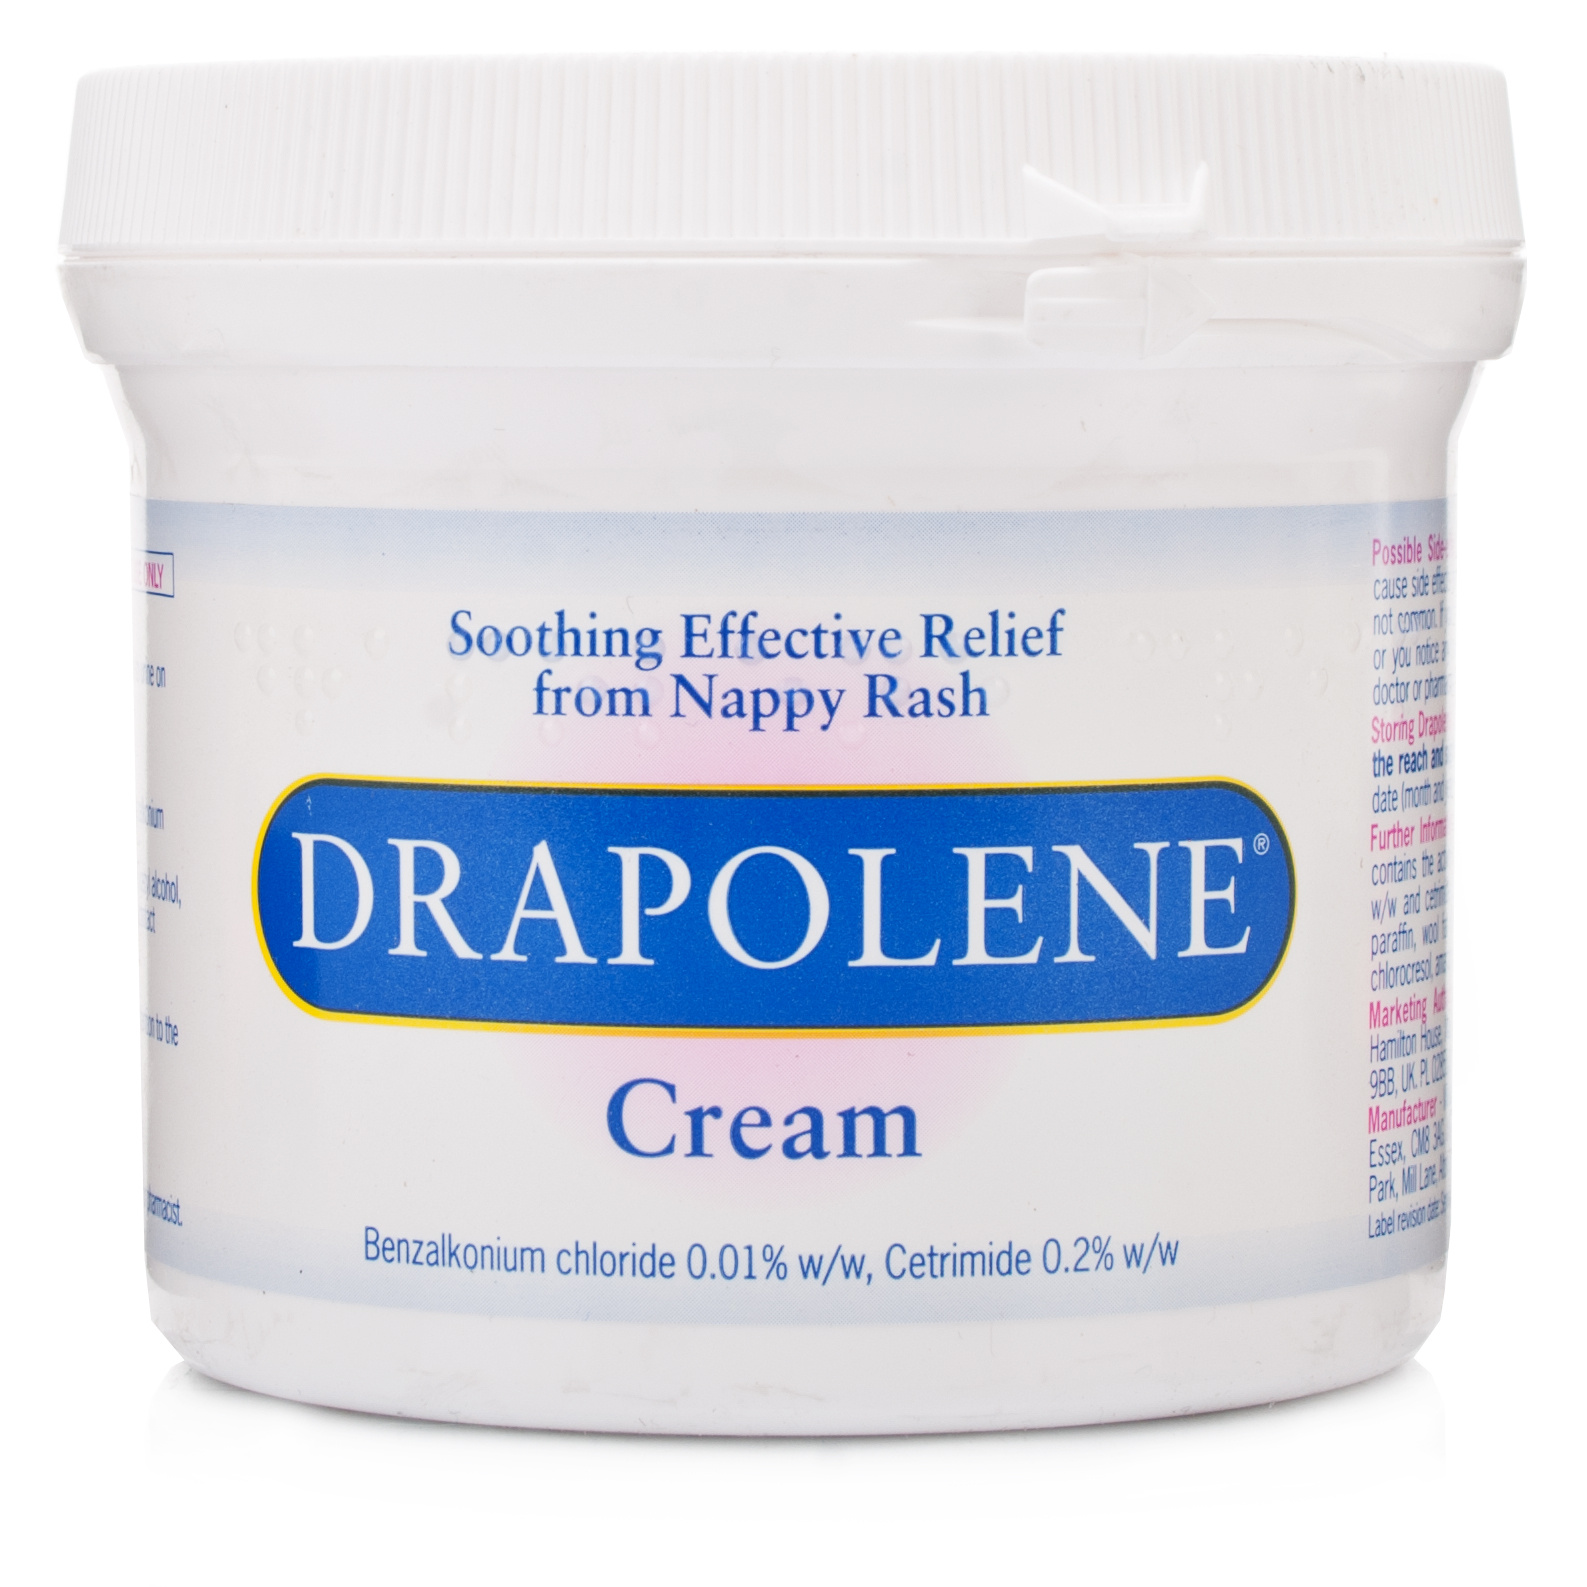 Drapolene Cream 350g For Nappy Rash | Chemist Direct